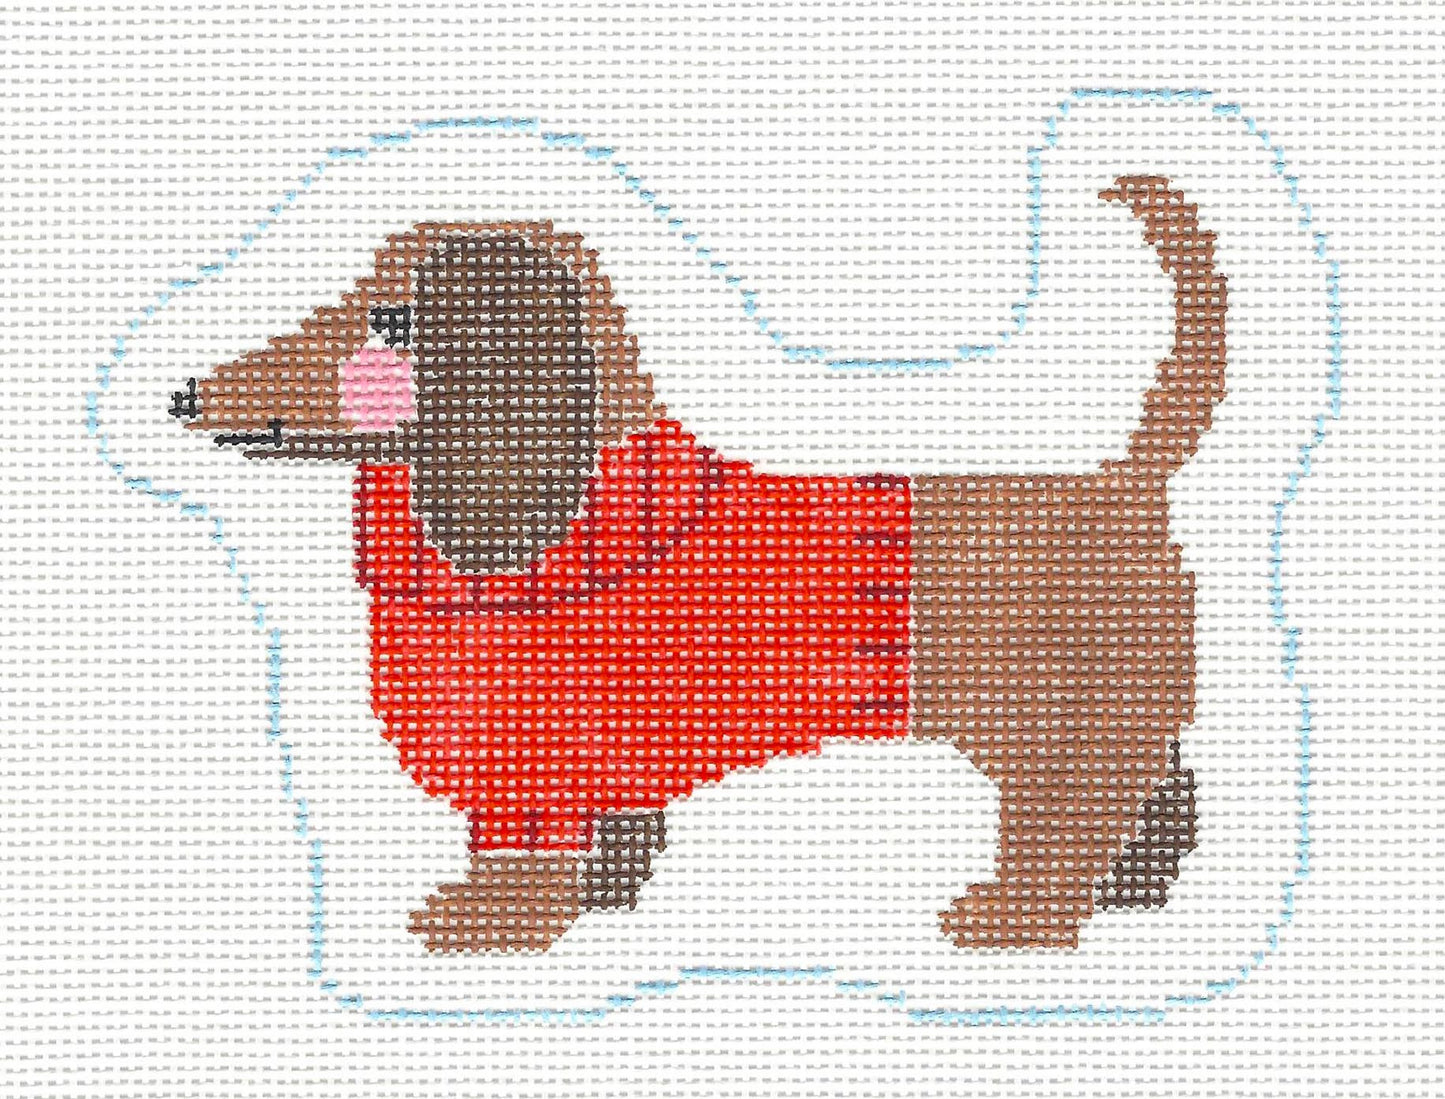 Dog canvas ~ Dachshund in a Red Sweater handpainted Needlepoint Canvas by Kathy Schenkel